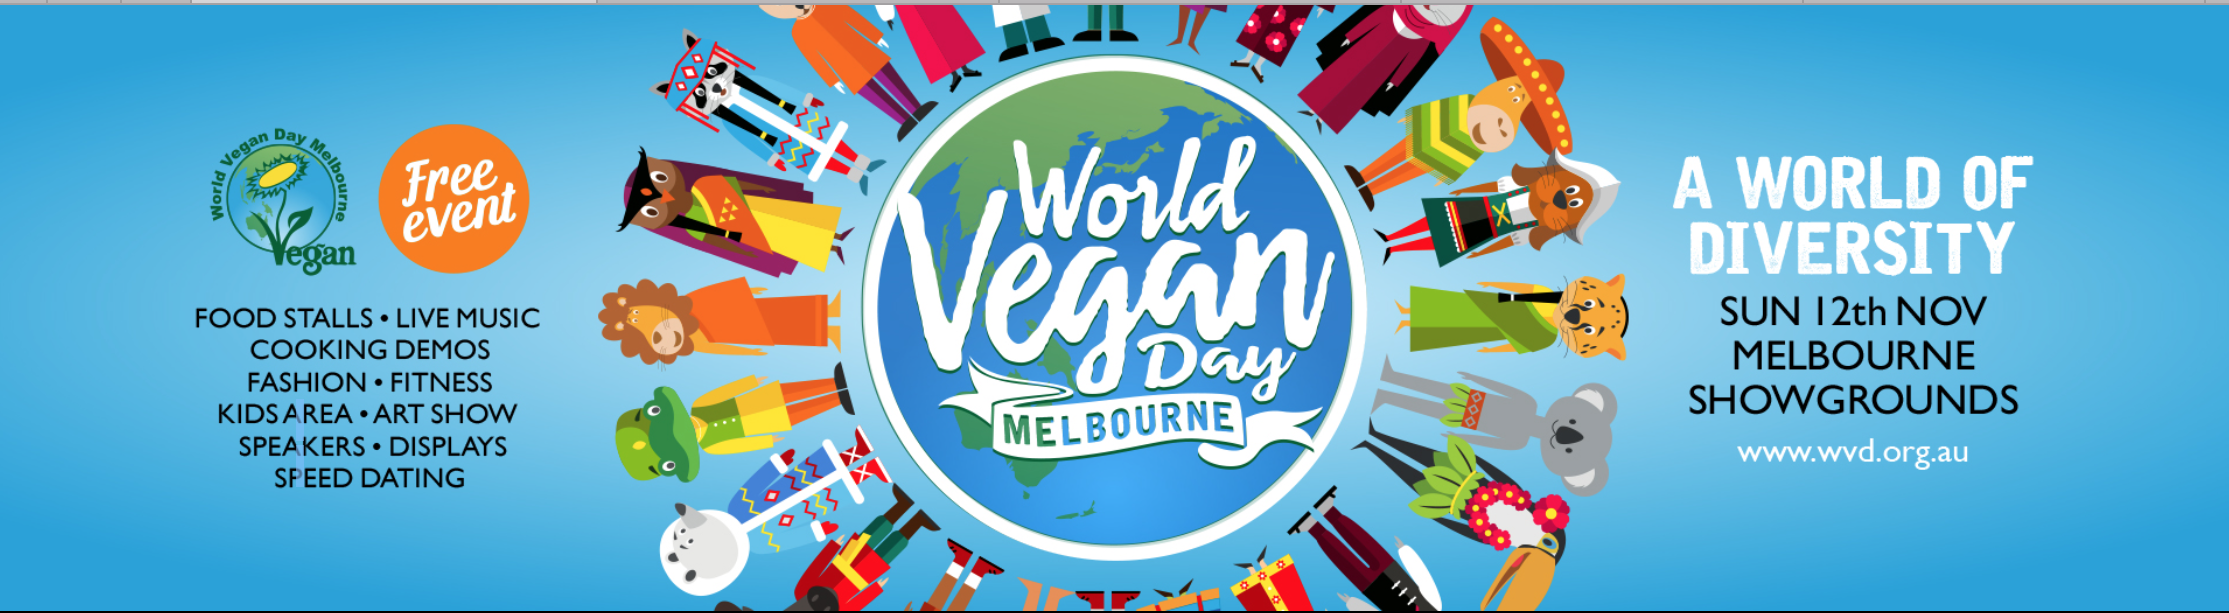 World Vegan Day header image